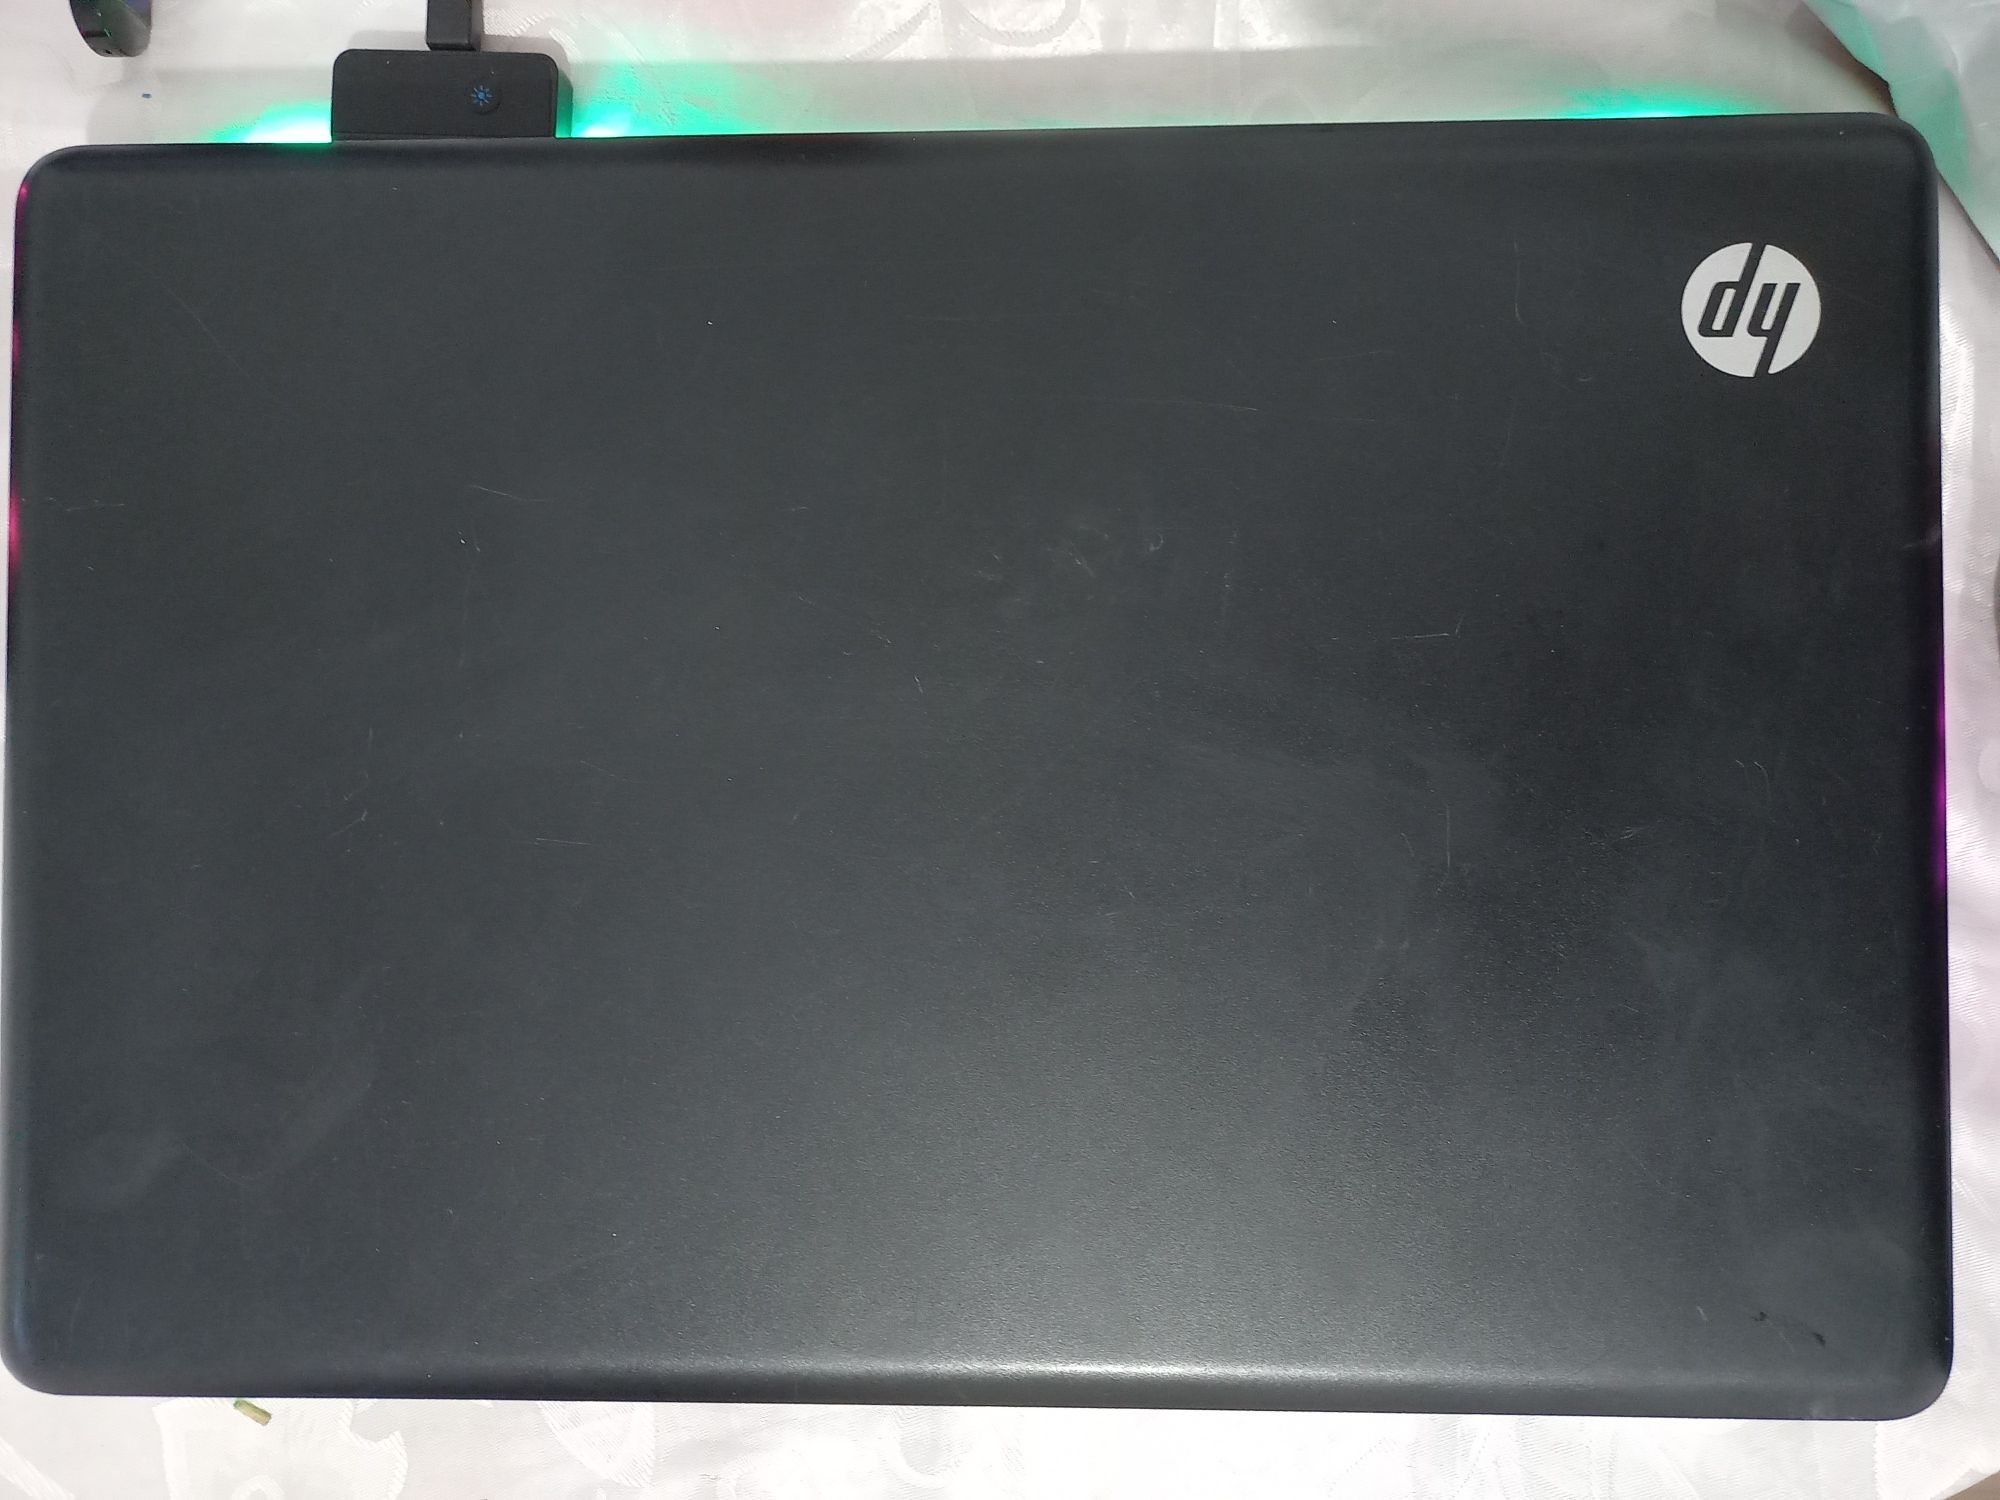 HP Laptop Intel Celeron 900 (2.2GHz) 4GB Memory 250GB HDD Intel GMA 45